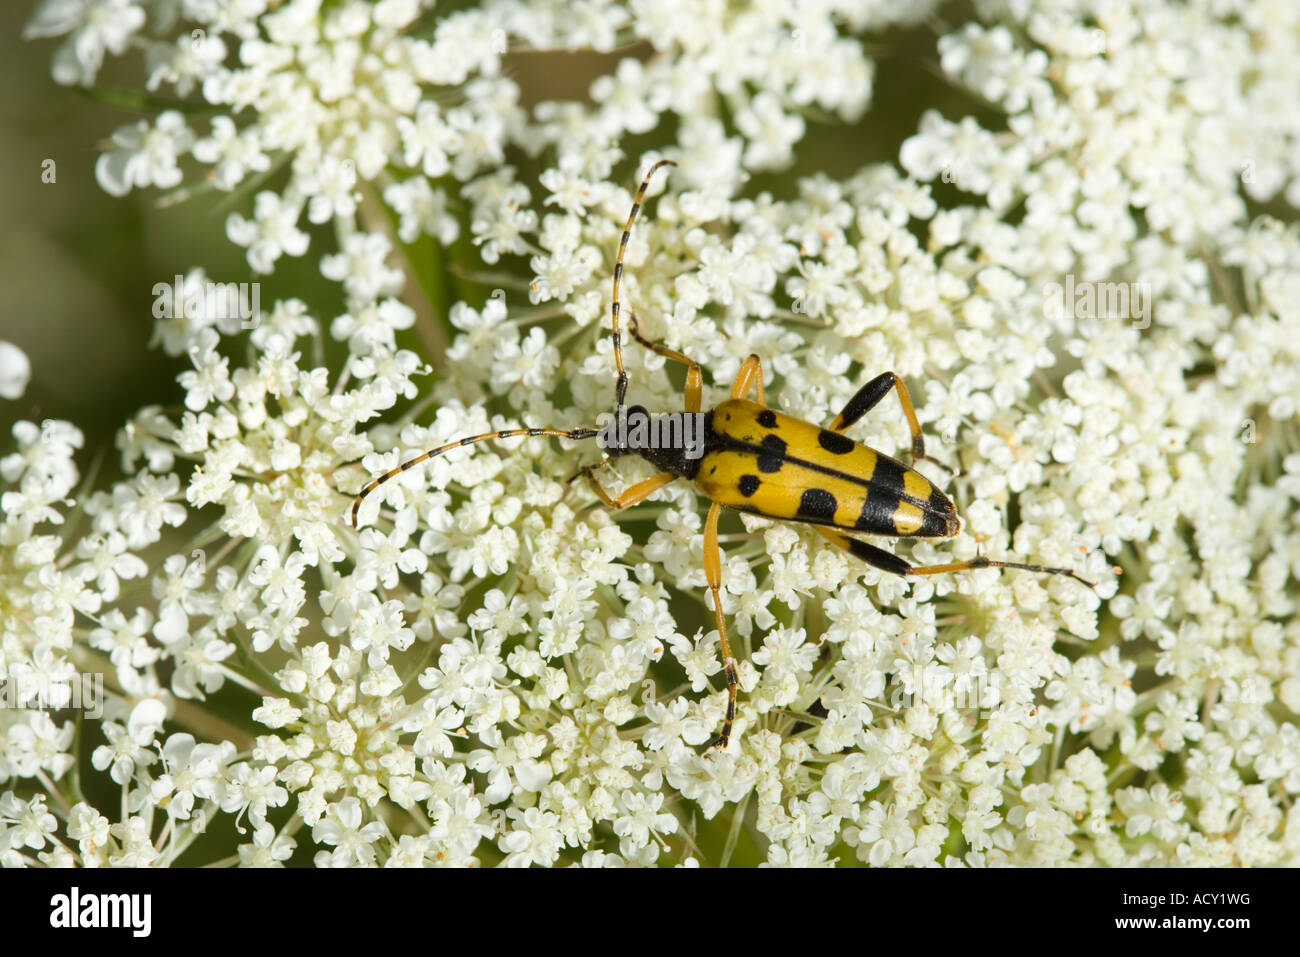 Strangalia maculata, a type of longhorn beetle, on wild carrot flower Stock Photo